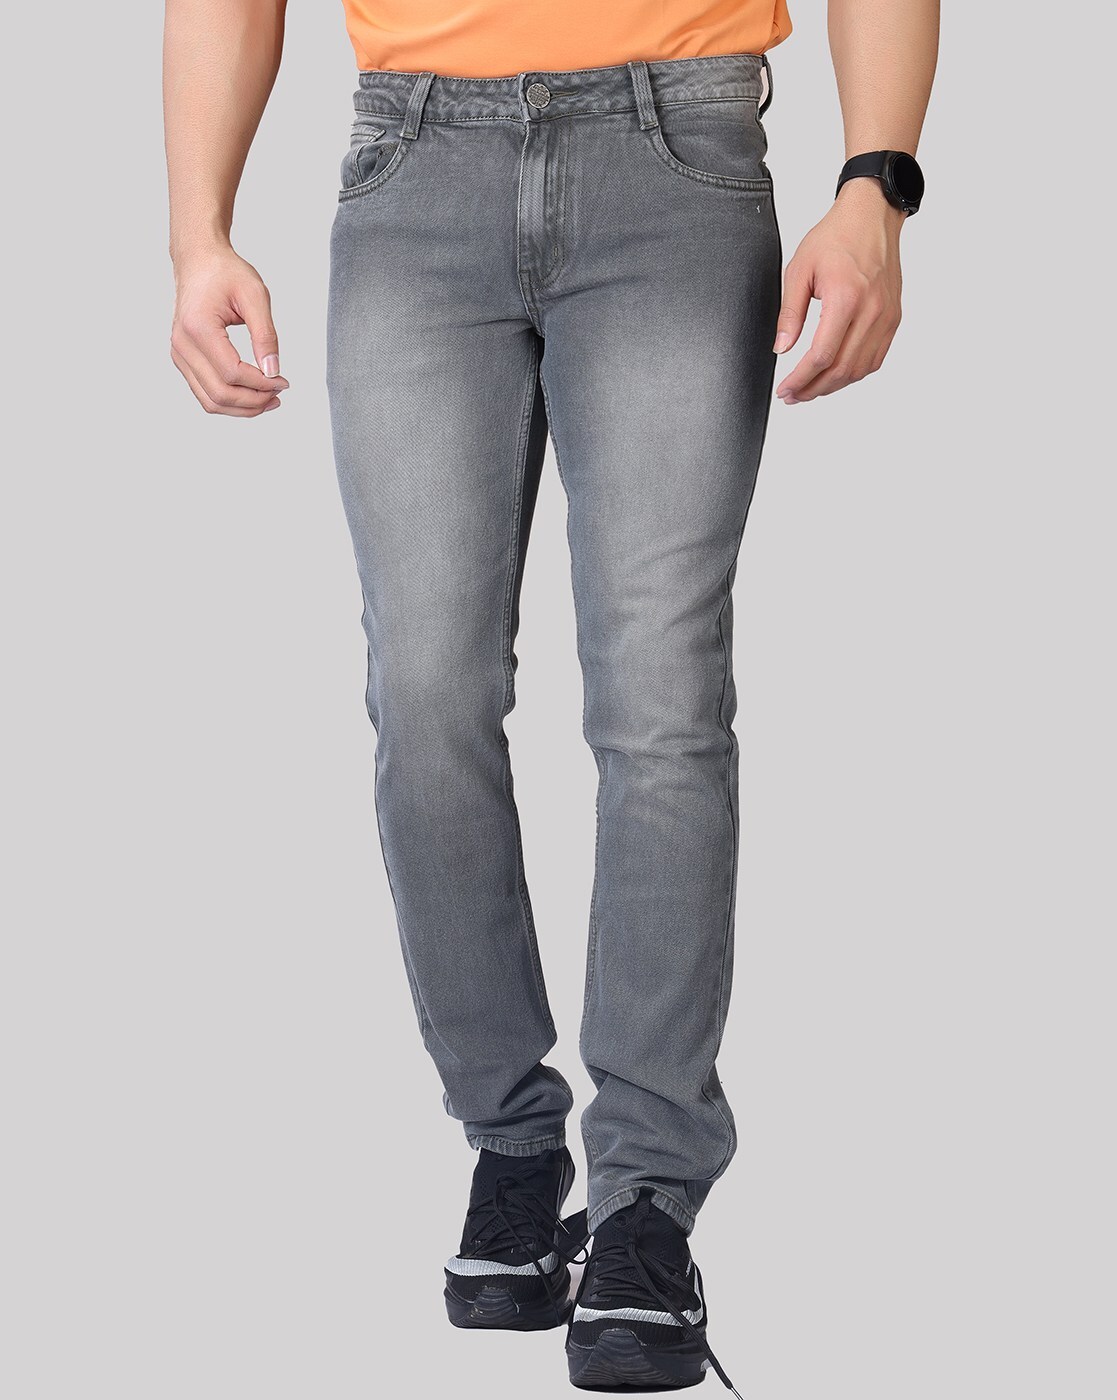 Regular Fit Faded Designer Men Jeans, Grey at Rs 500/piece in New Delhi |  ID: 2852141789388